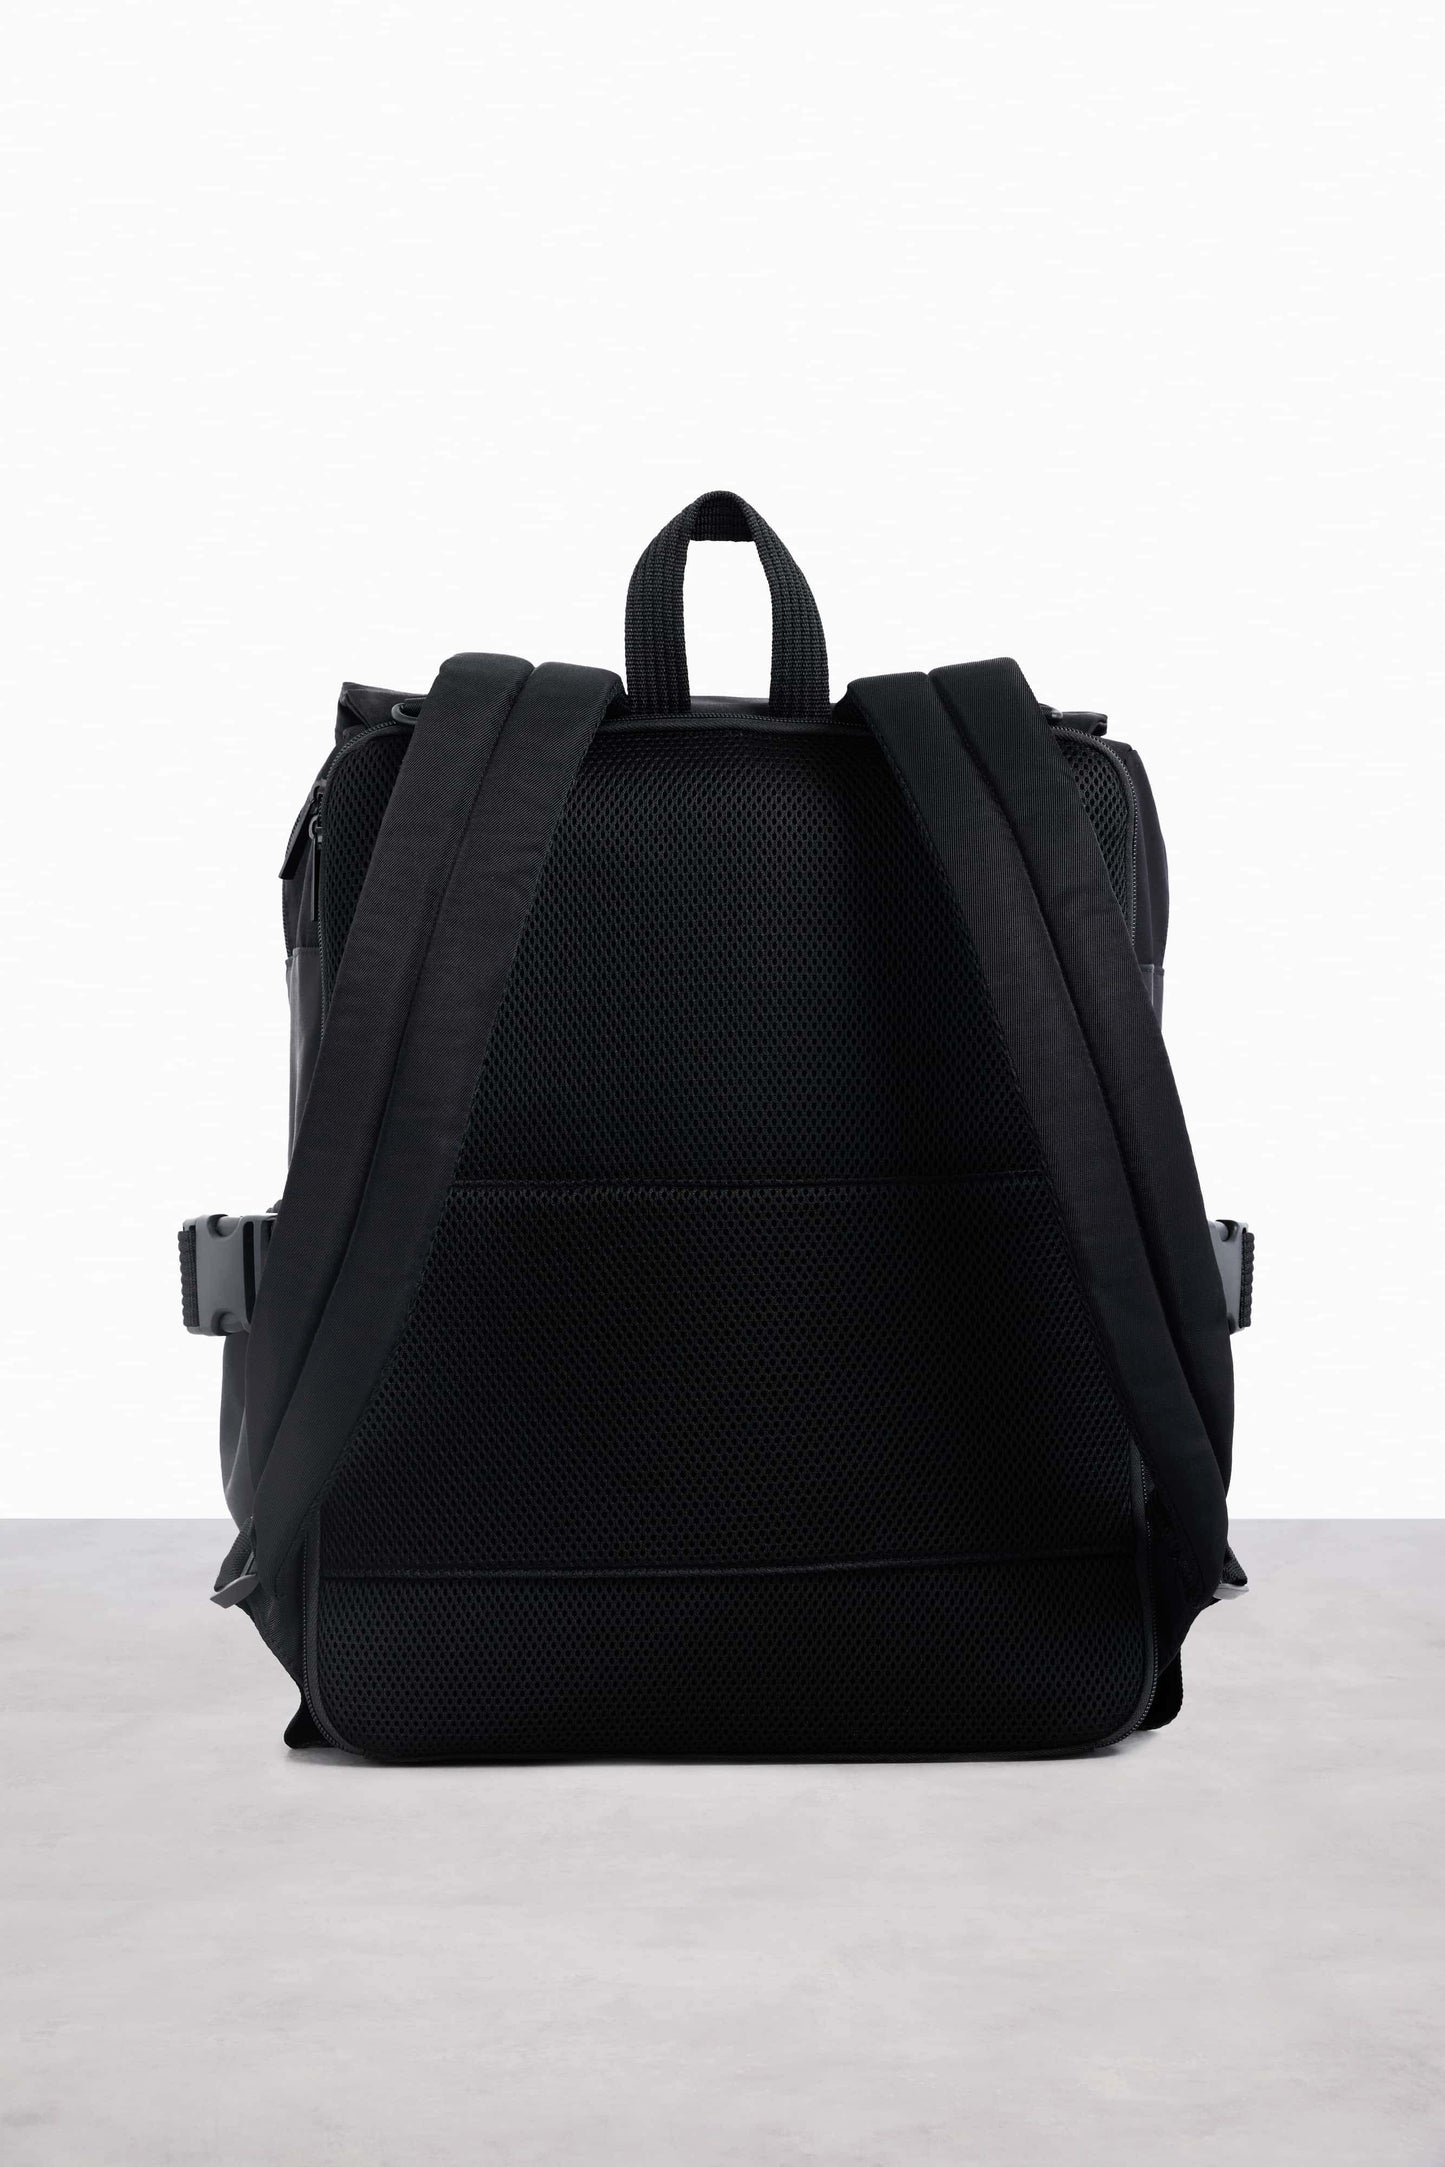 The Ultimate Diaper Backpack in Black